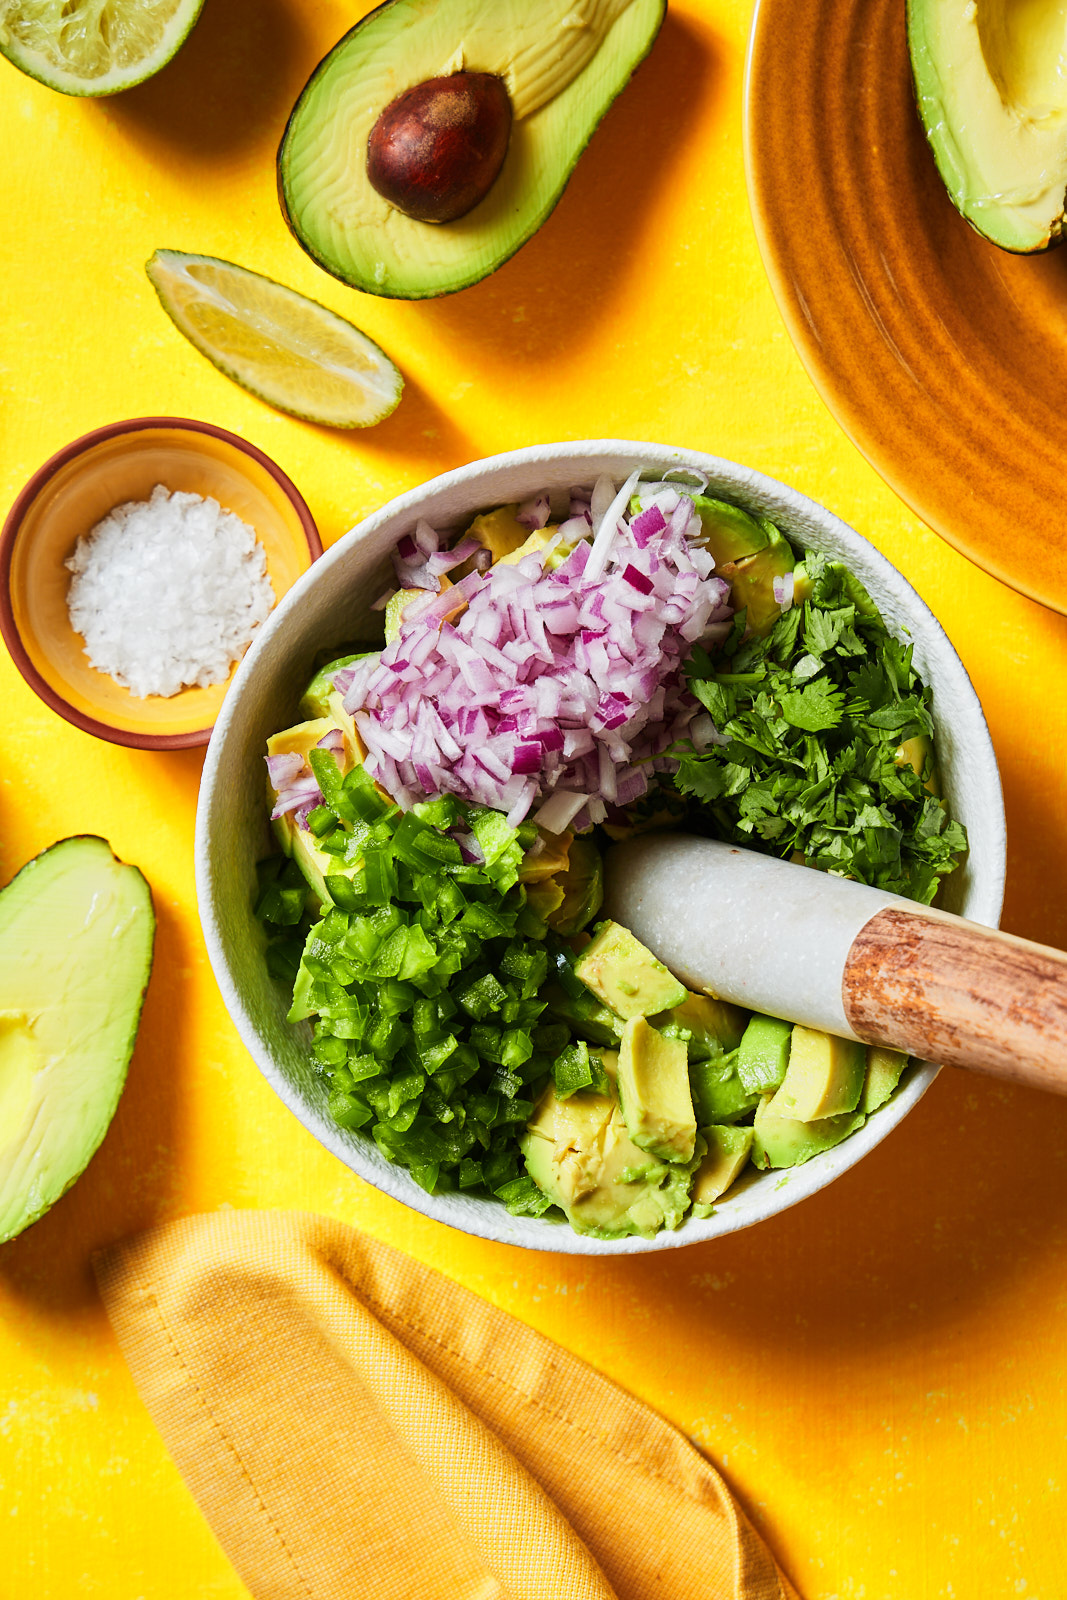 How to make guacamole